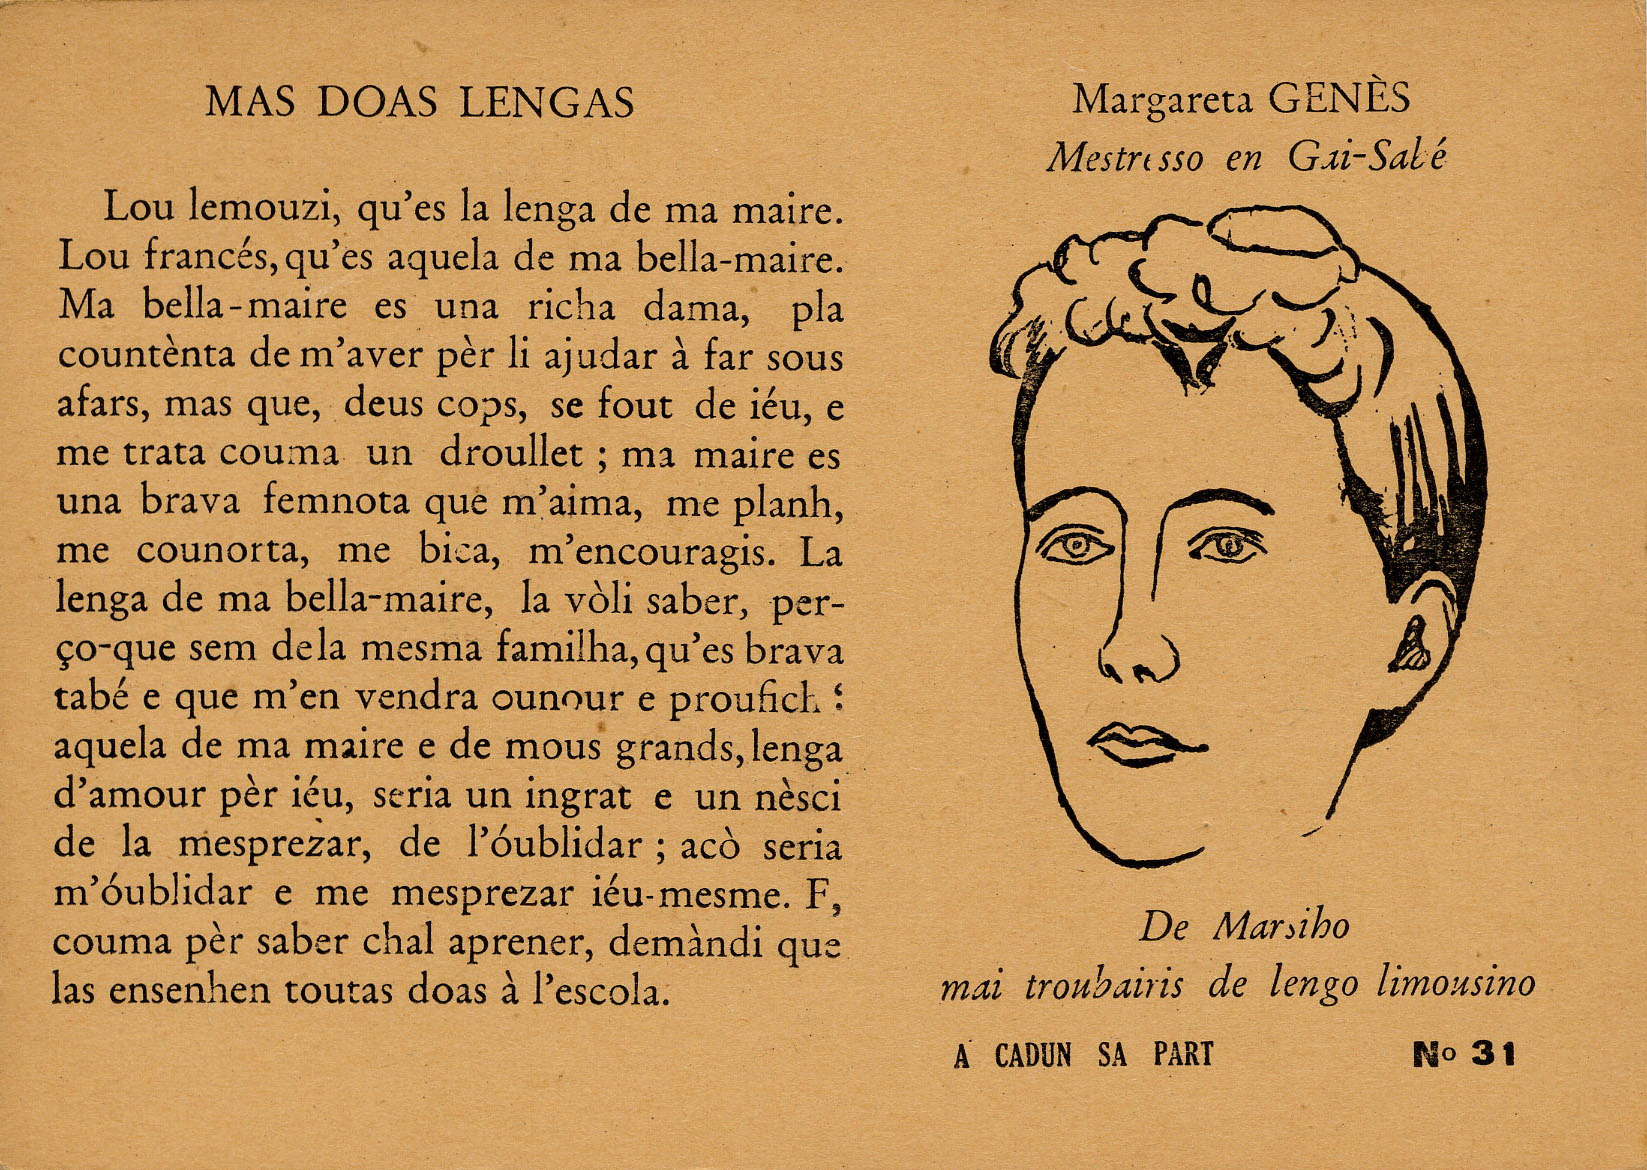 [Margareta Genès : Mestresso en Gai-Sabé], série de carte postale <i>A cadun sa part</i>, coll.CIRDÒC